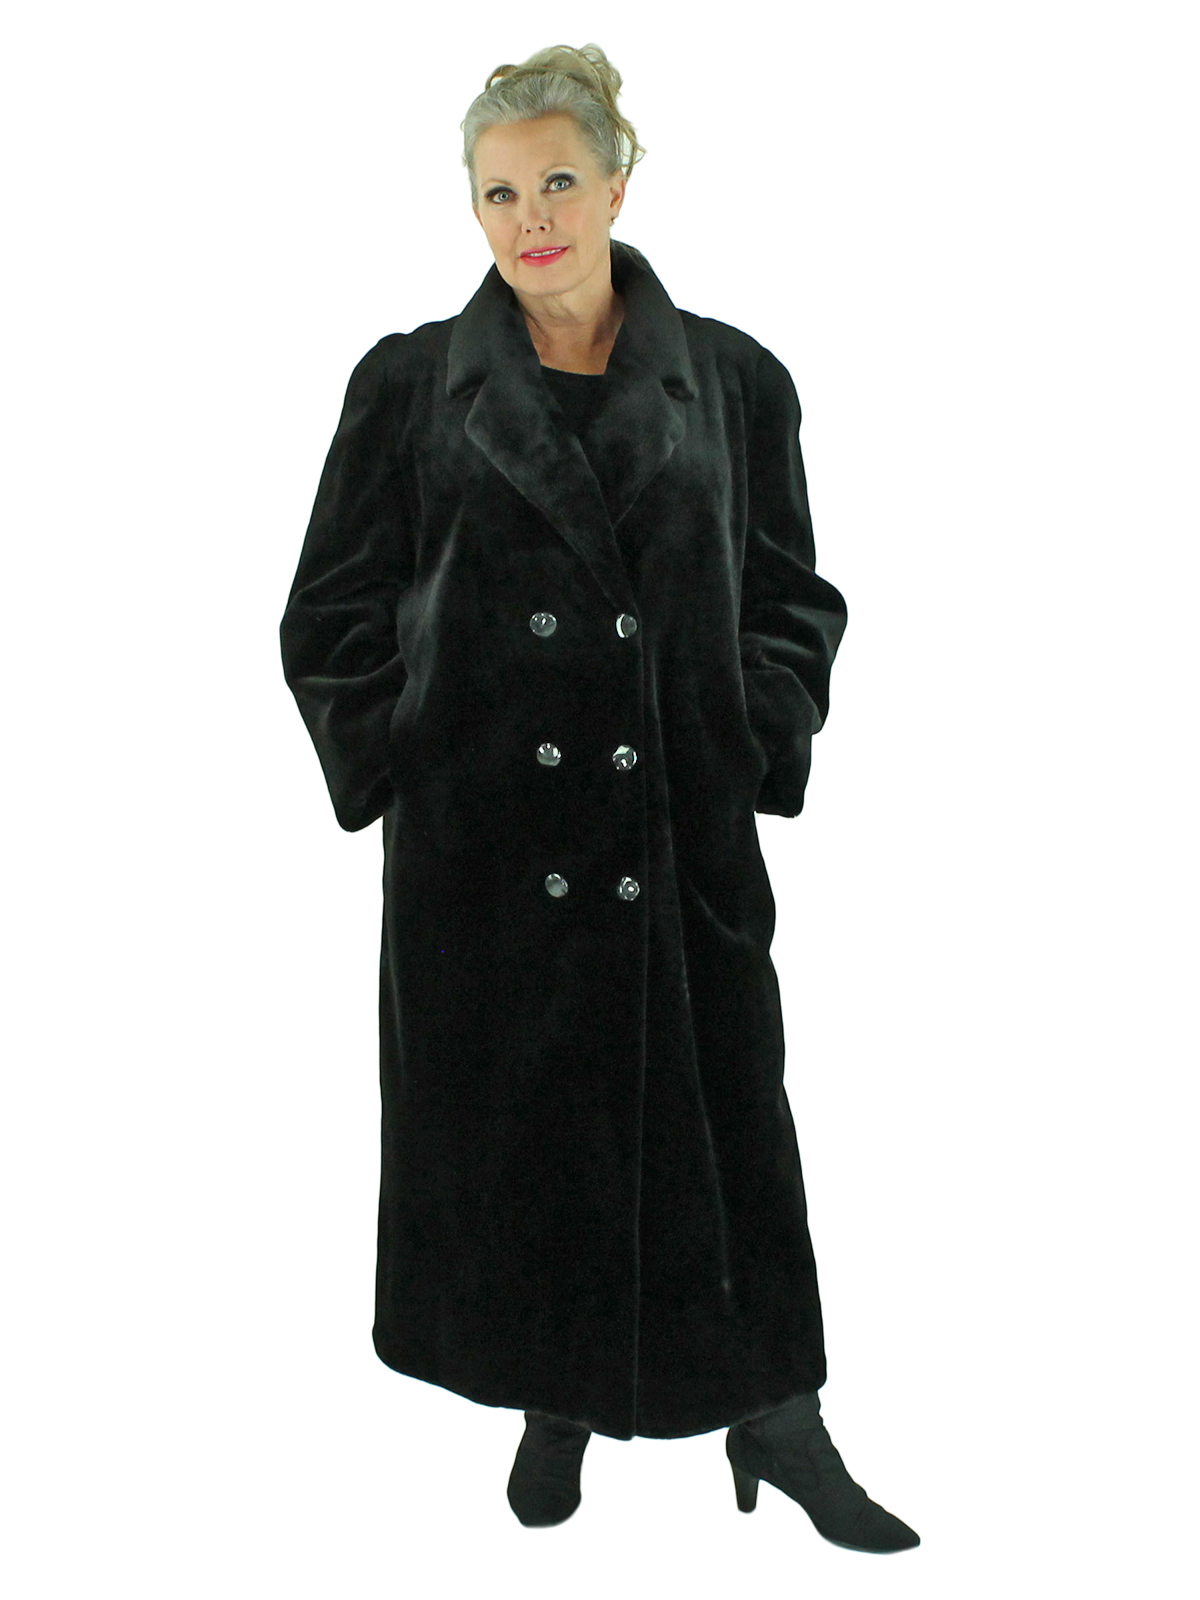 Woman's Black Sheared Mink Fur Coat Reversible to Rain Fabric